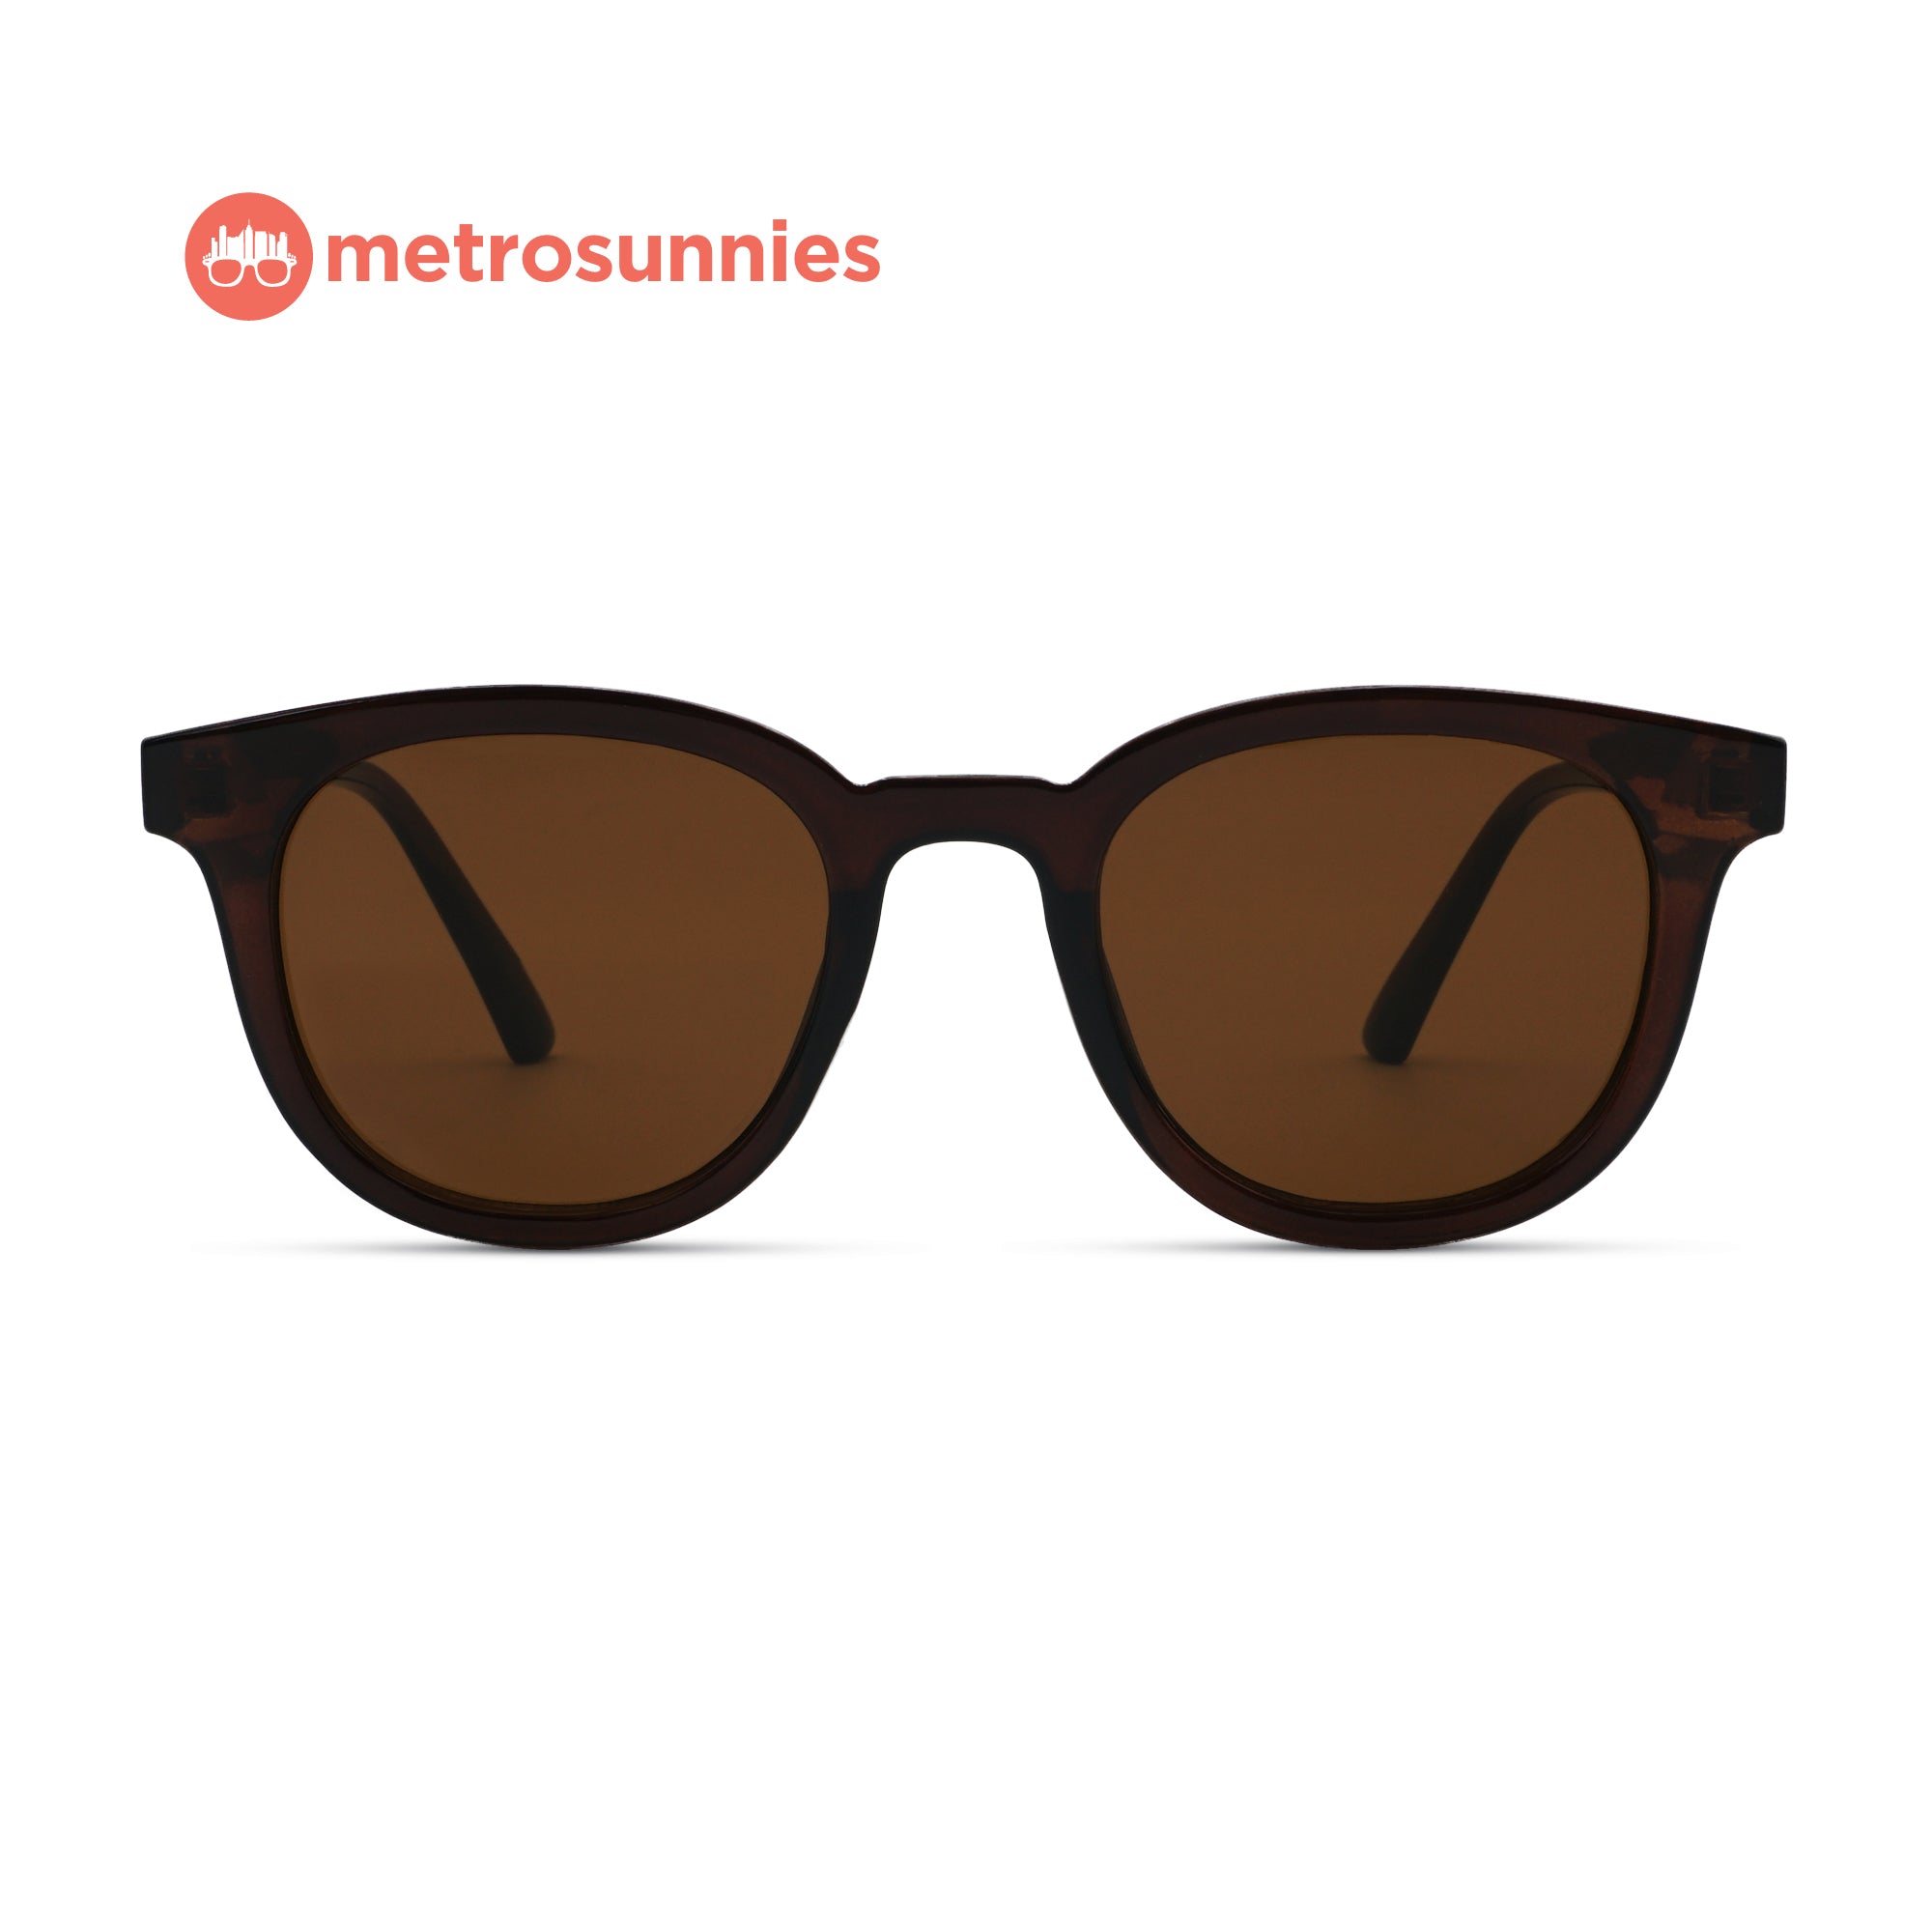 MetroSunnies Jacky Sunnies (Brown) / Sunglasses with UV400 Protection / Fashion Eyewear Unisex